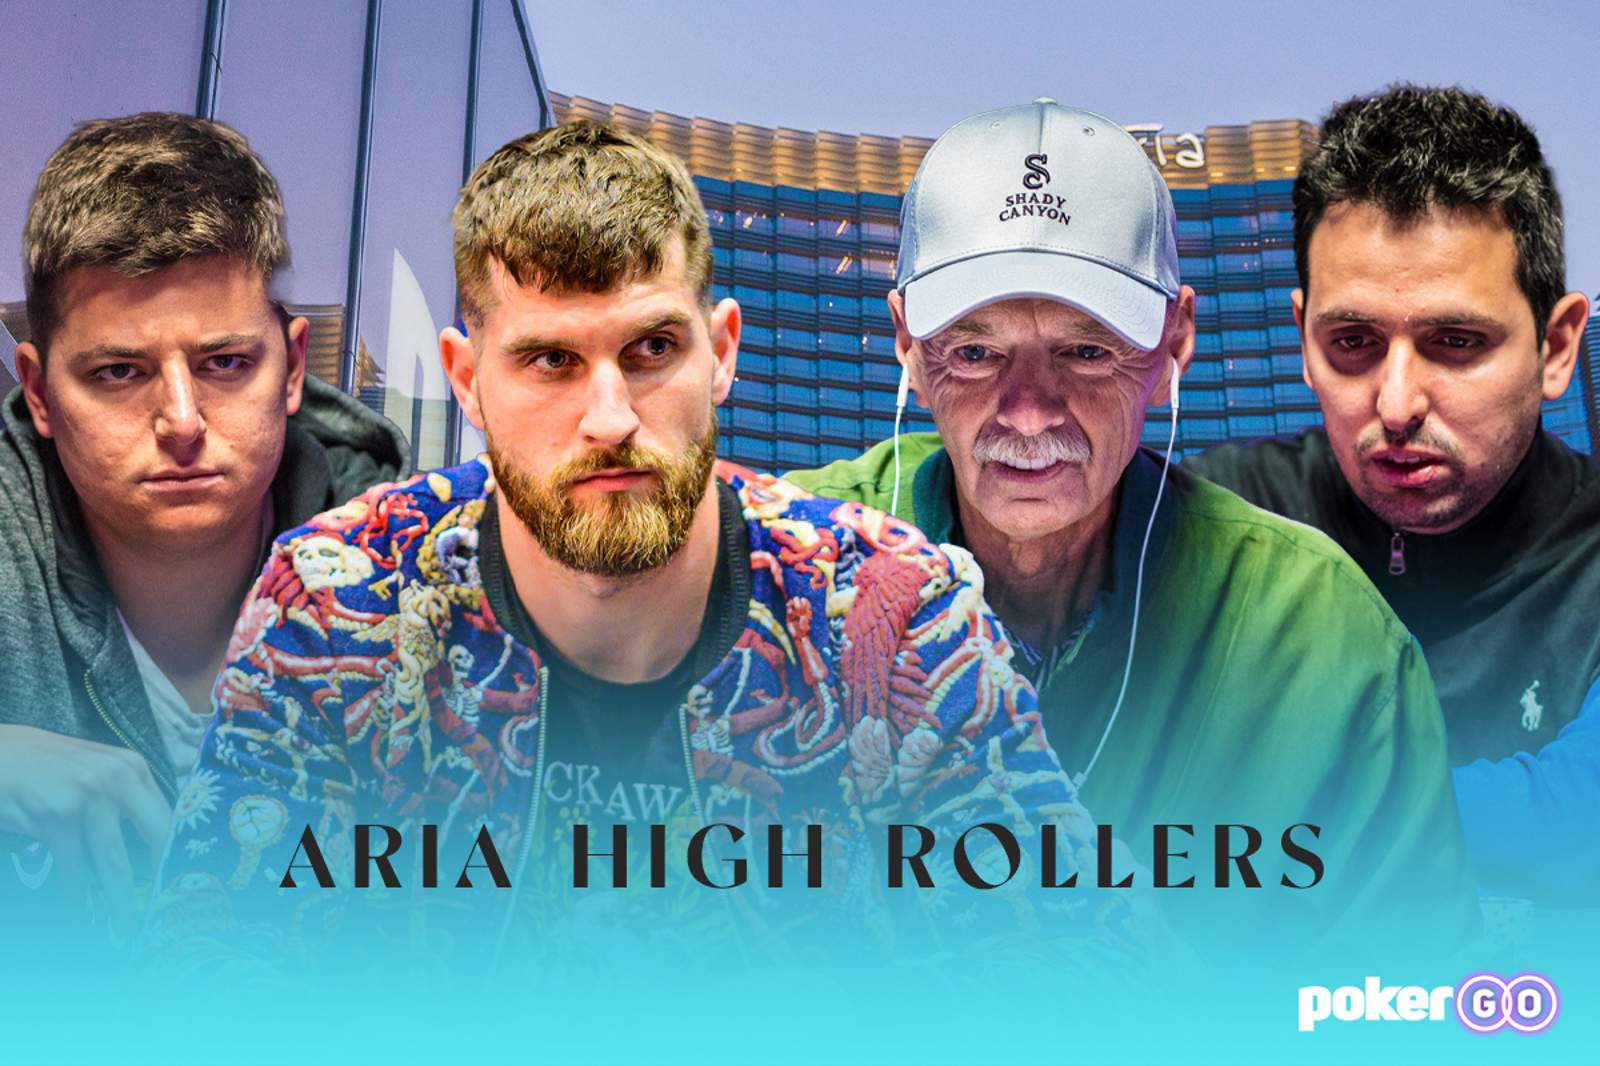 ARIA High Rollers Won by Matas Cimbolas, Sergio Aido, Bill Klein, and Jake Schindler